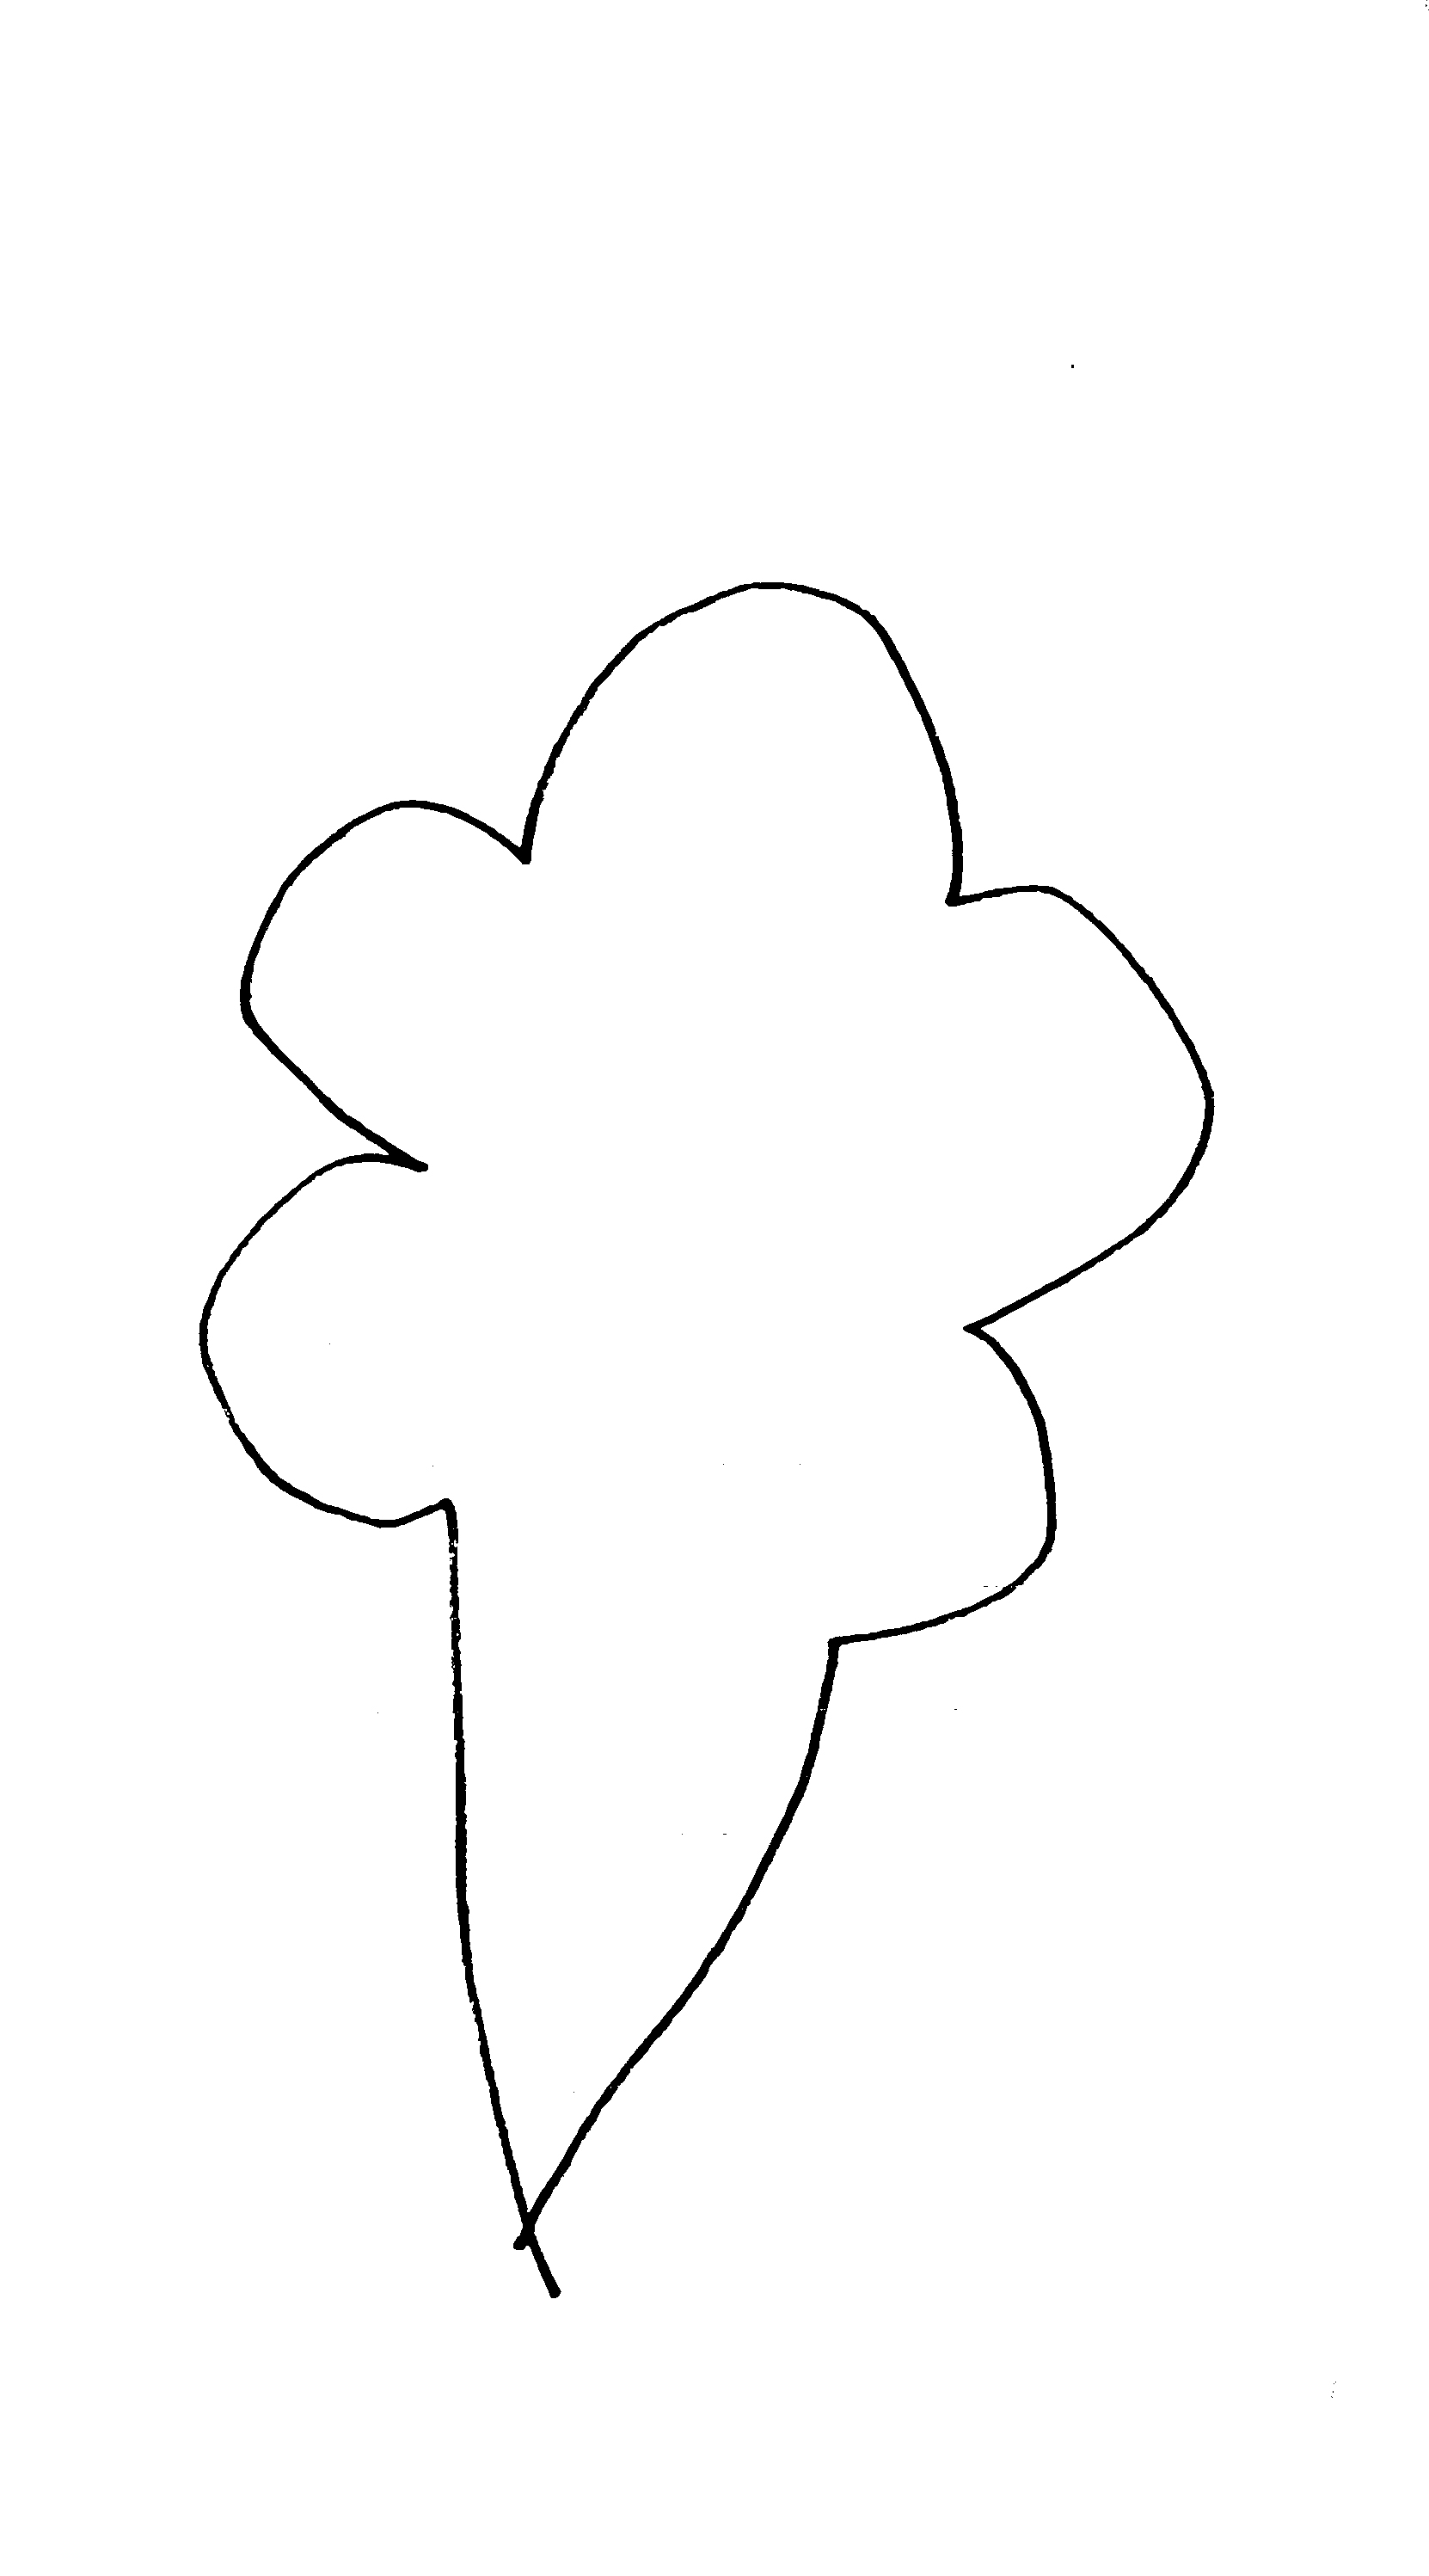 pen drawing of ice cream cone 